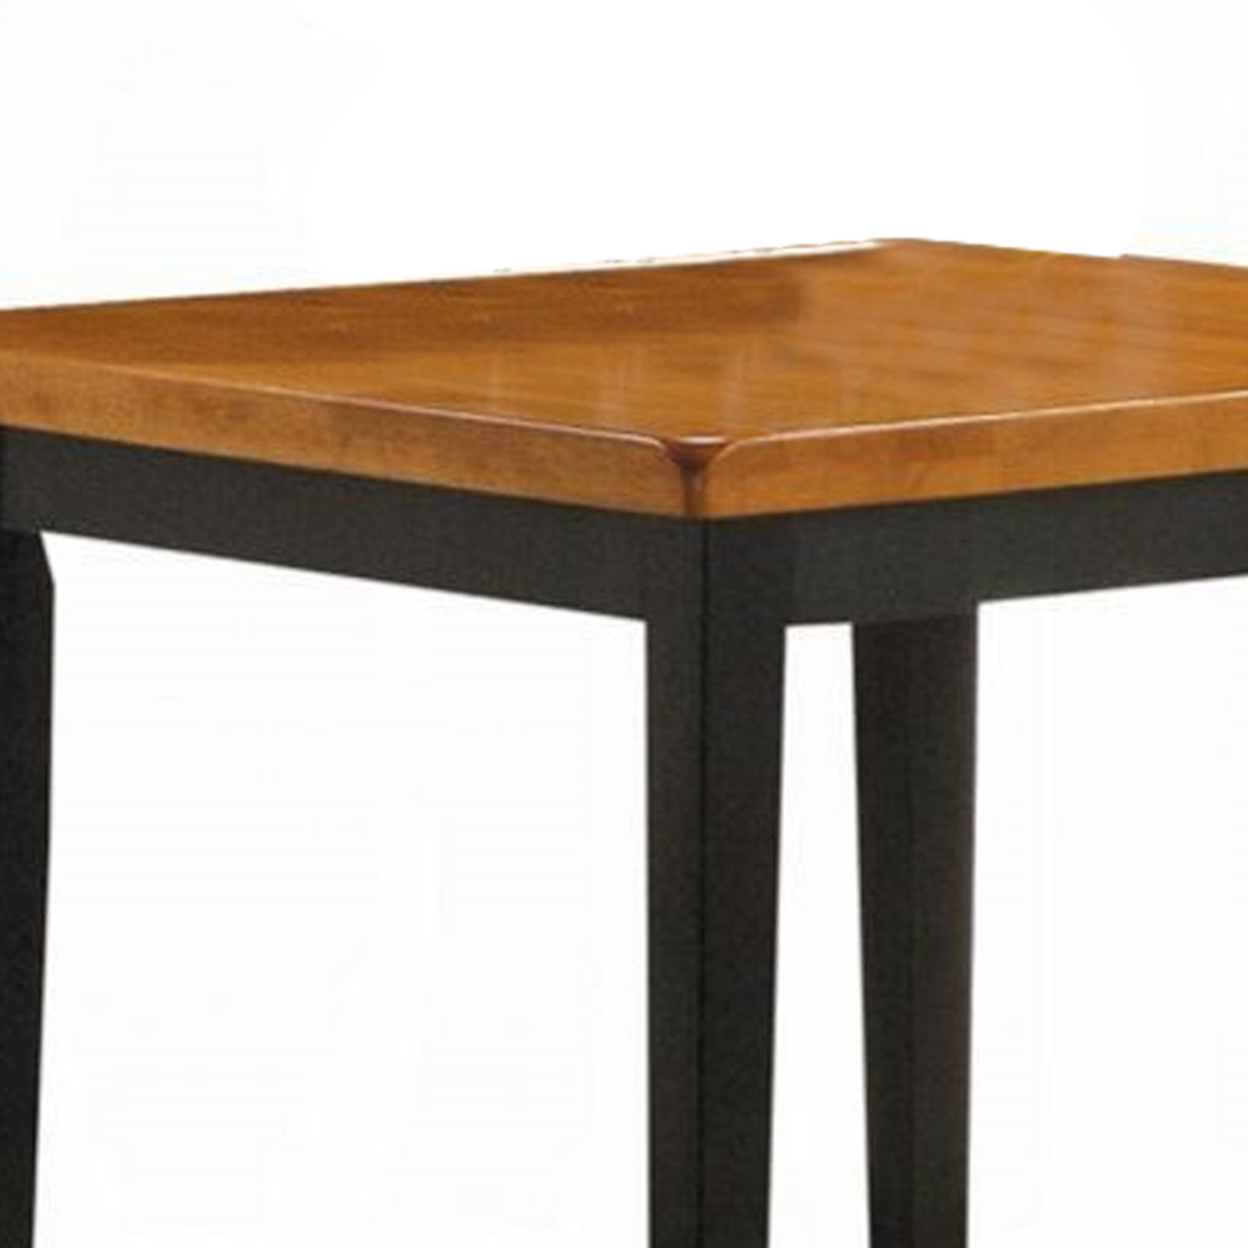 Gael Counter Height Square Dining Table Set, 4 Stools, Wood, Oak, Black- Saltoro Sherpi